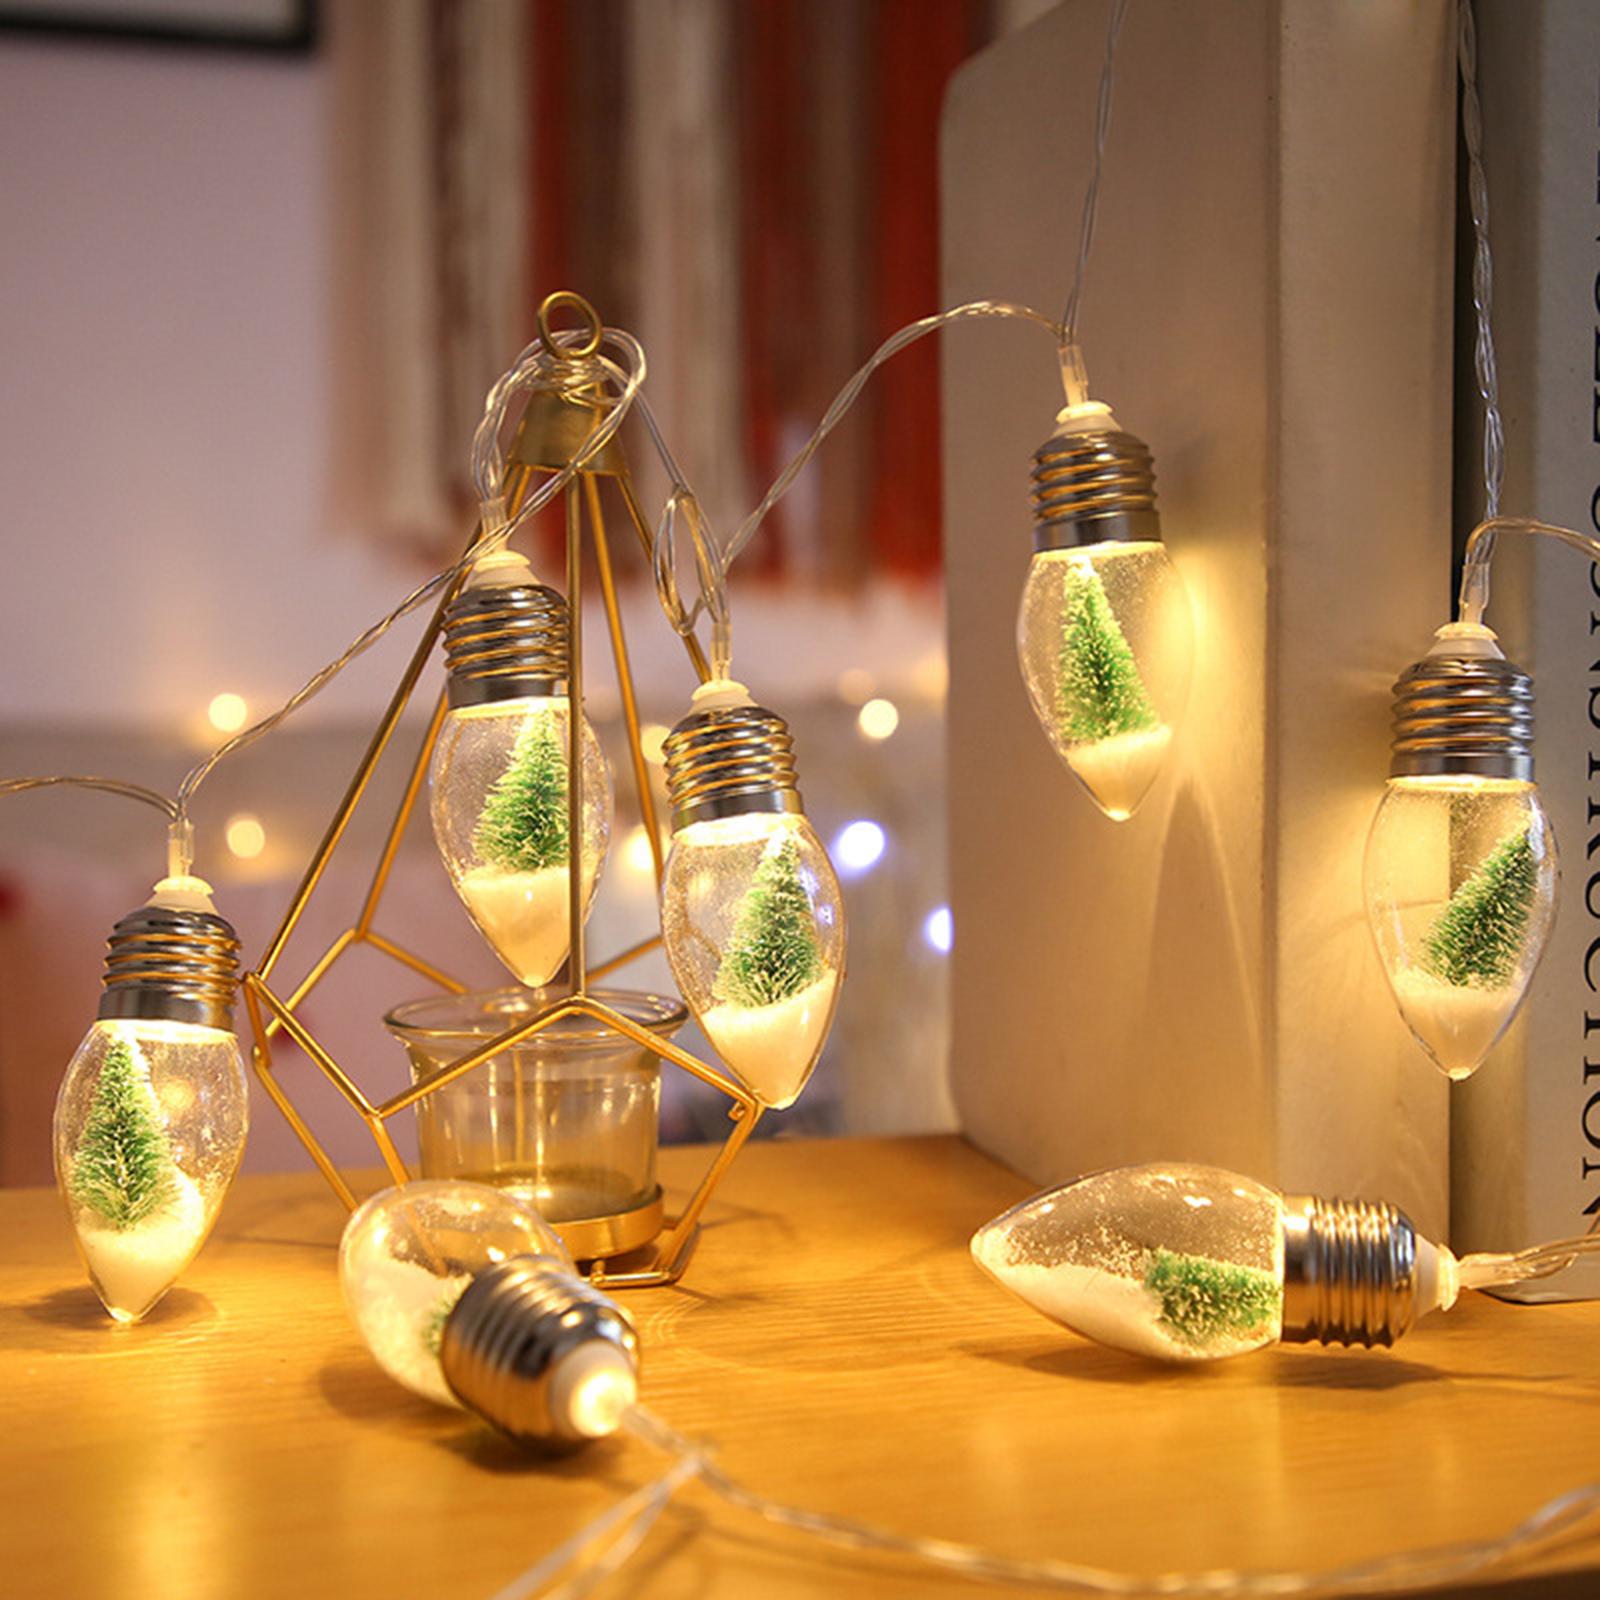 10 LED Wine Bottle Light String Fairy Wire Night Light for Home Wedding 2m